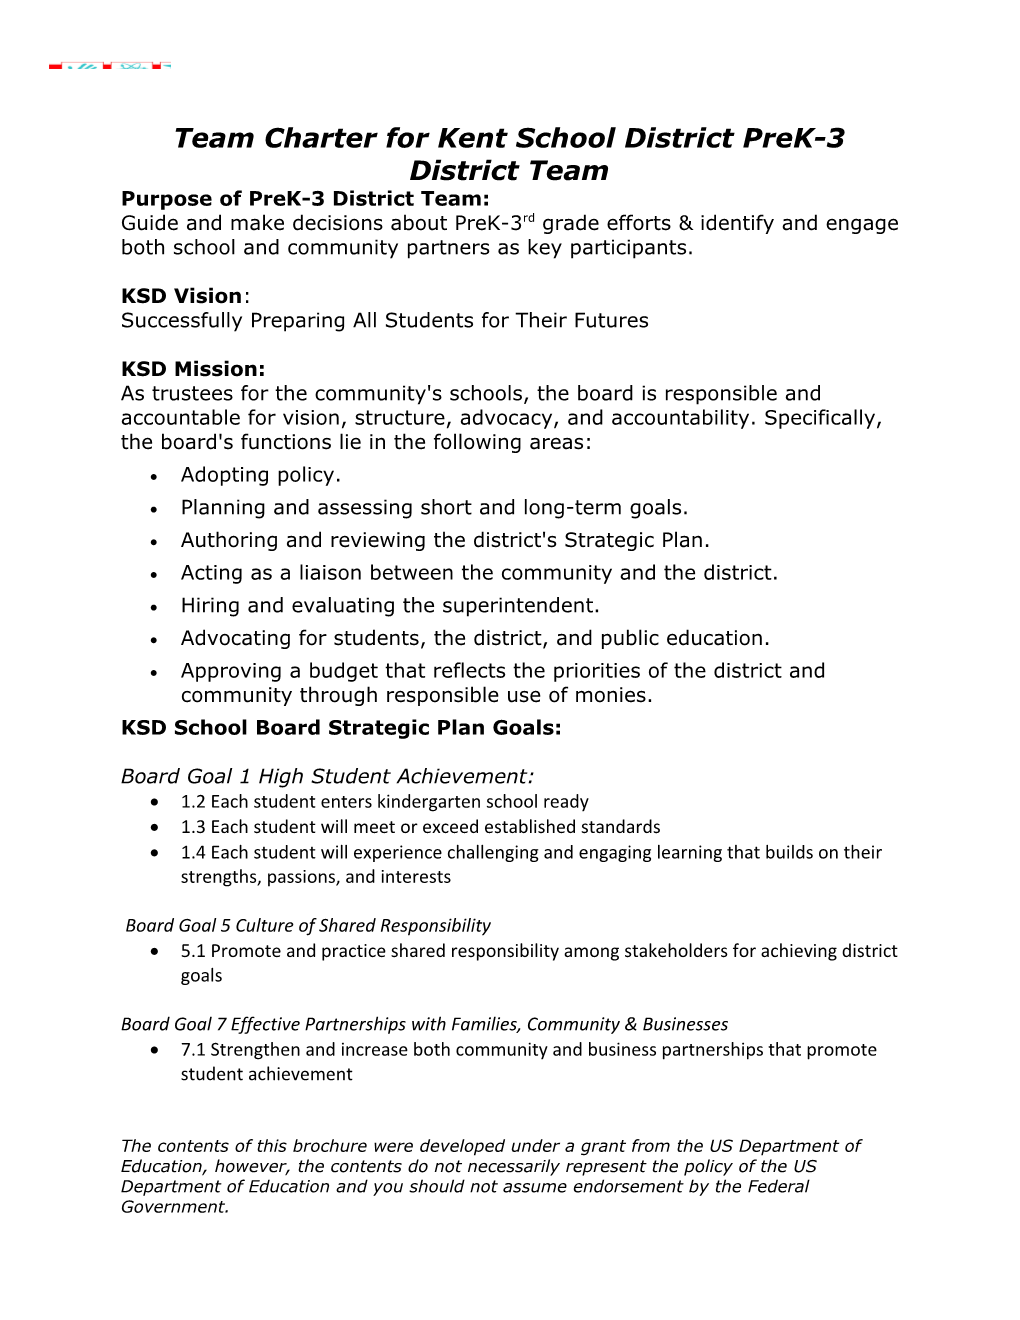 Team Charter for Kent School Districtprek-3 District Team